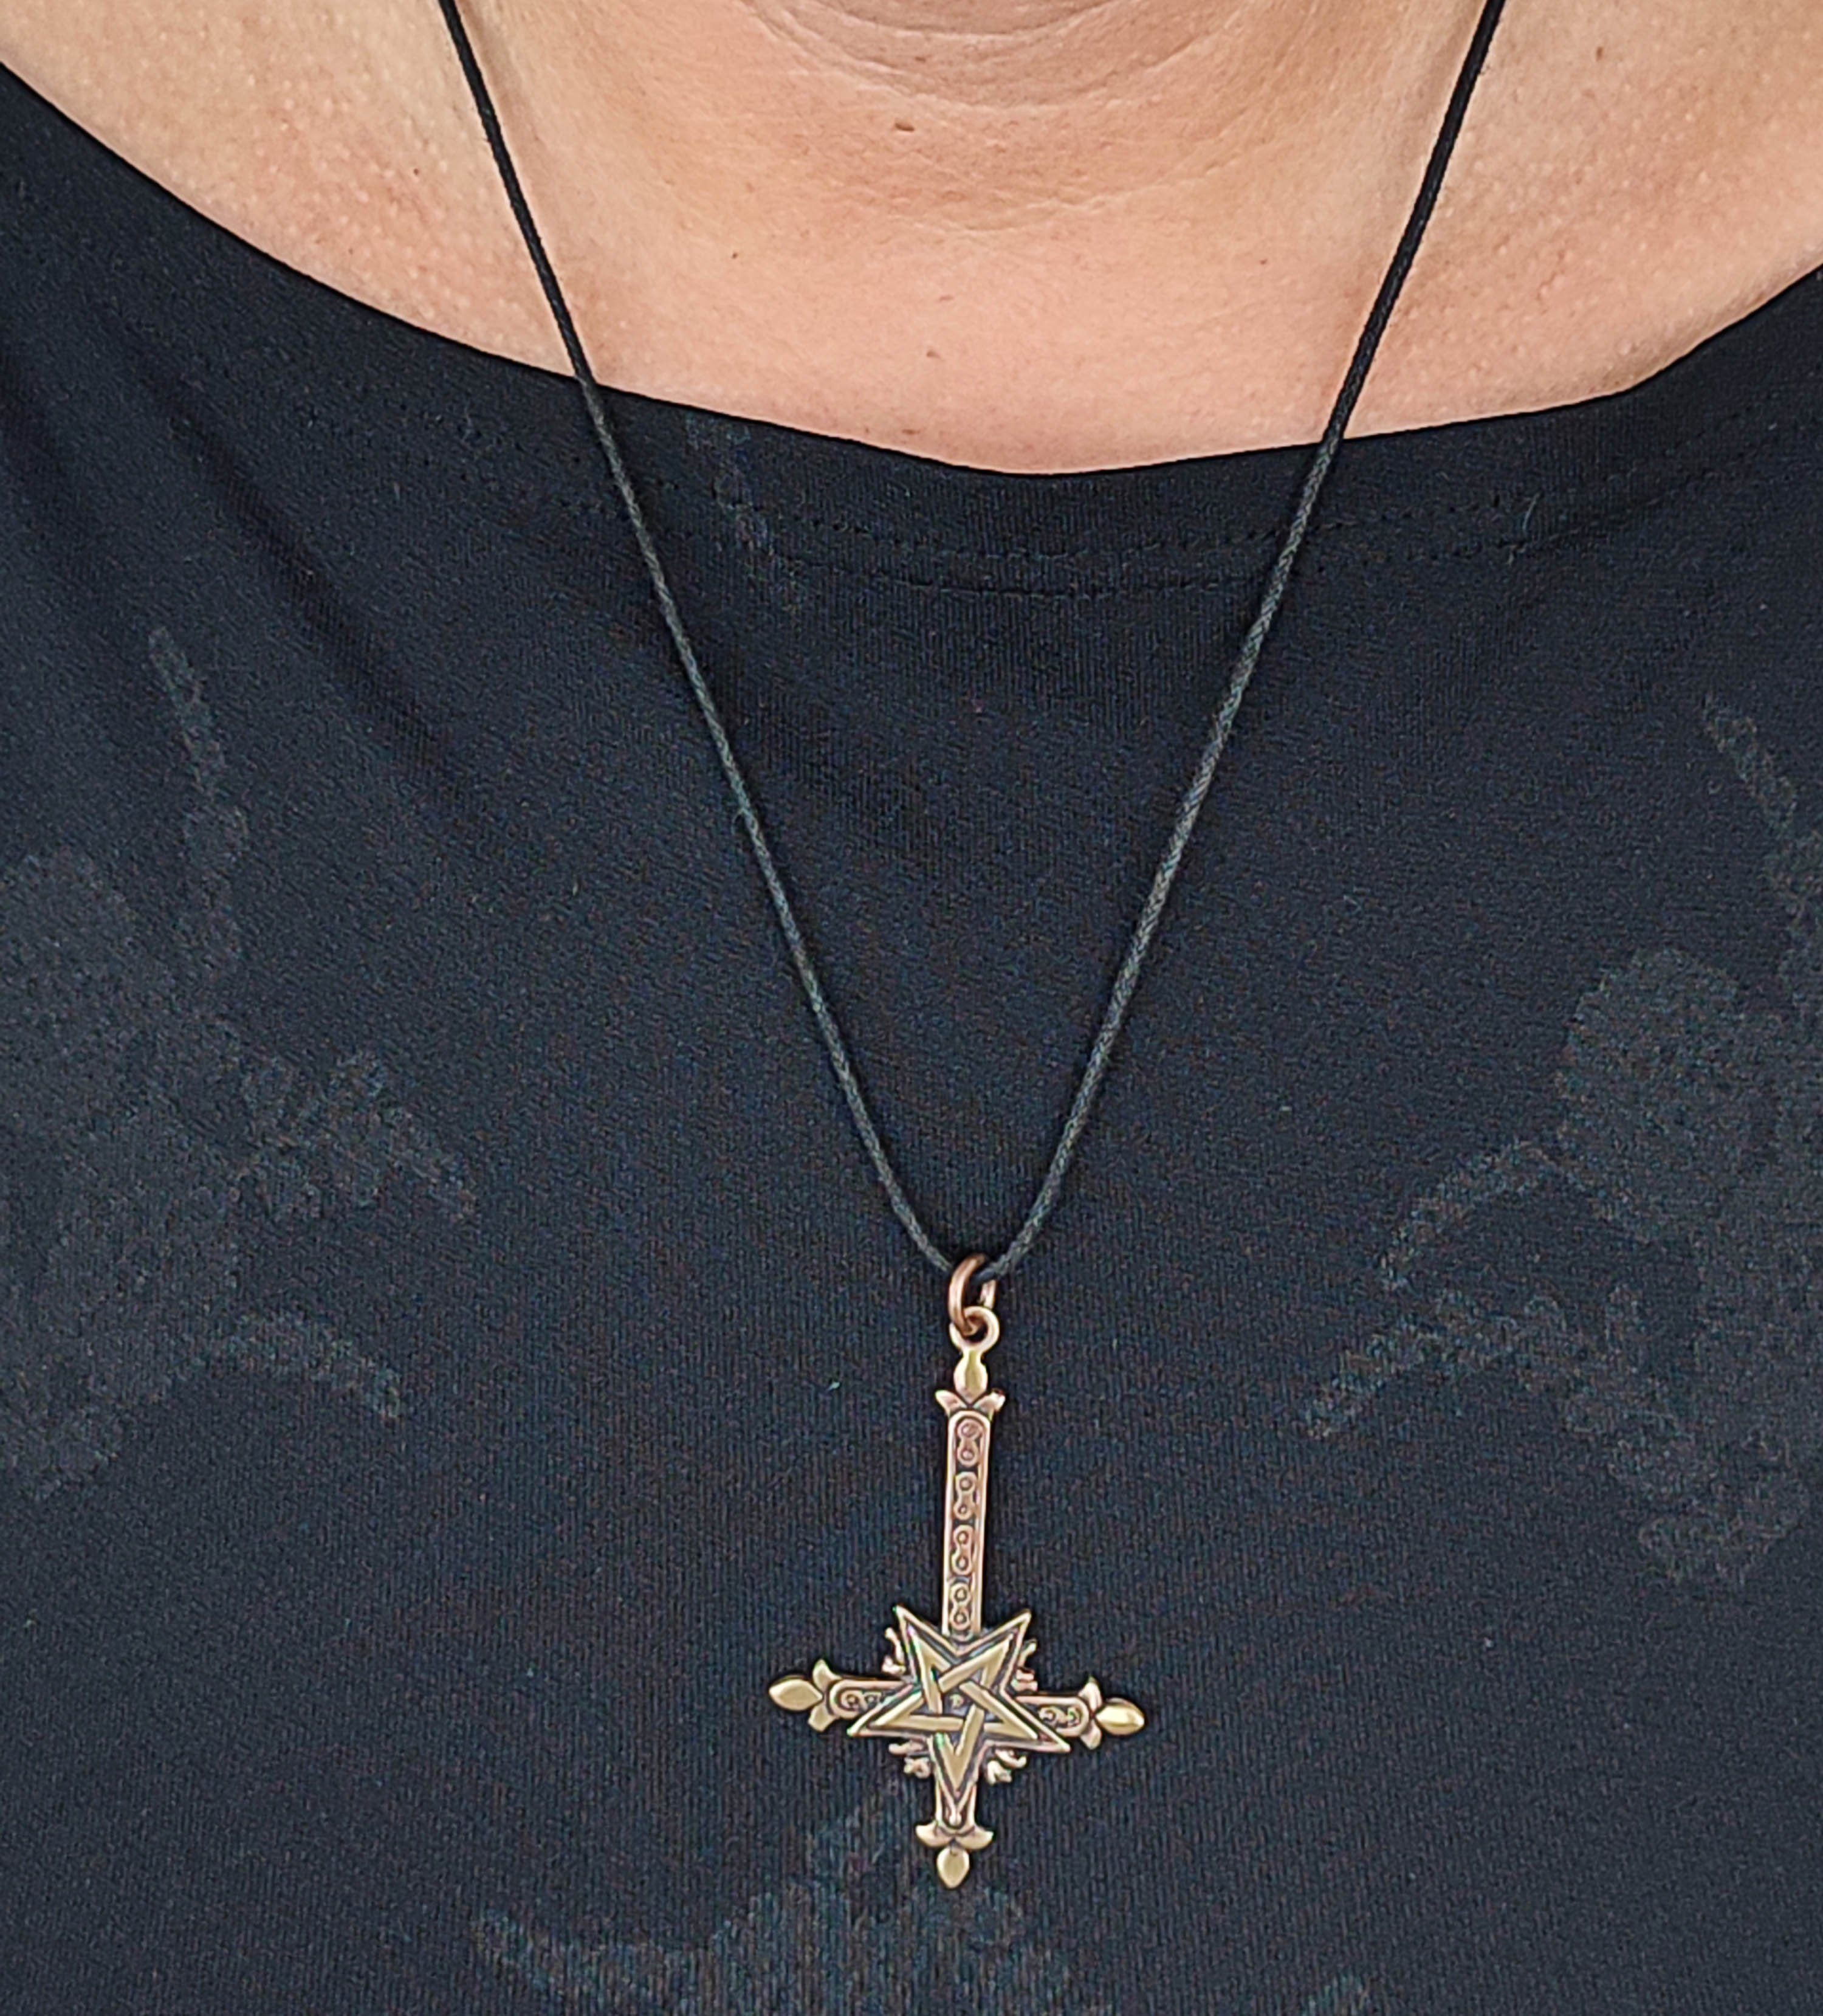 Anhänger Bronze Kiss of Teufel umgedrehtes Kettenanhänger Satanskreuz Leather Satan Satanist Kreuz